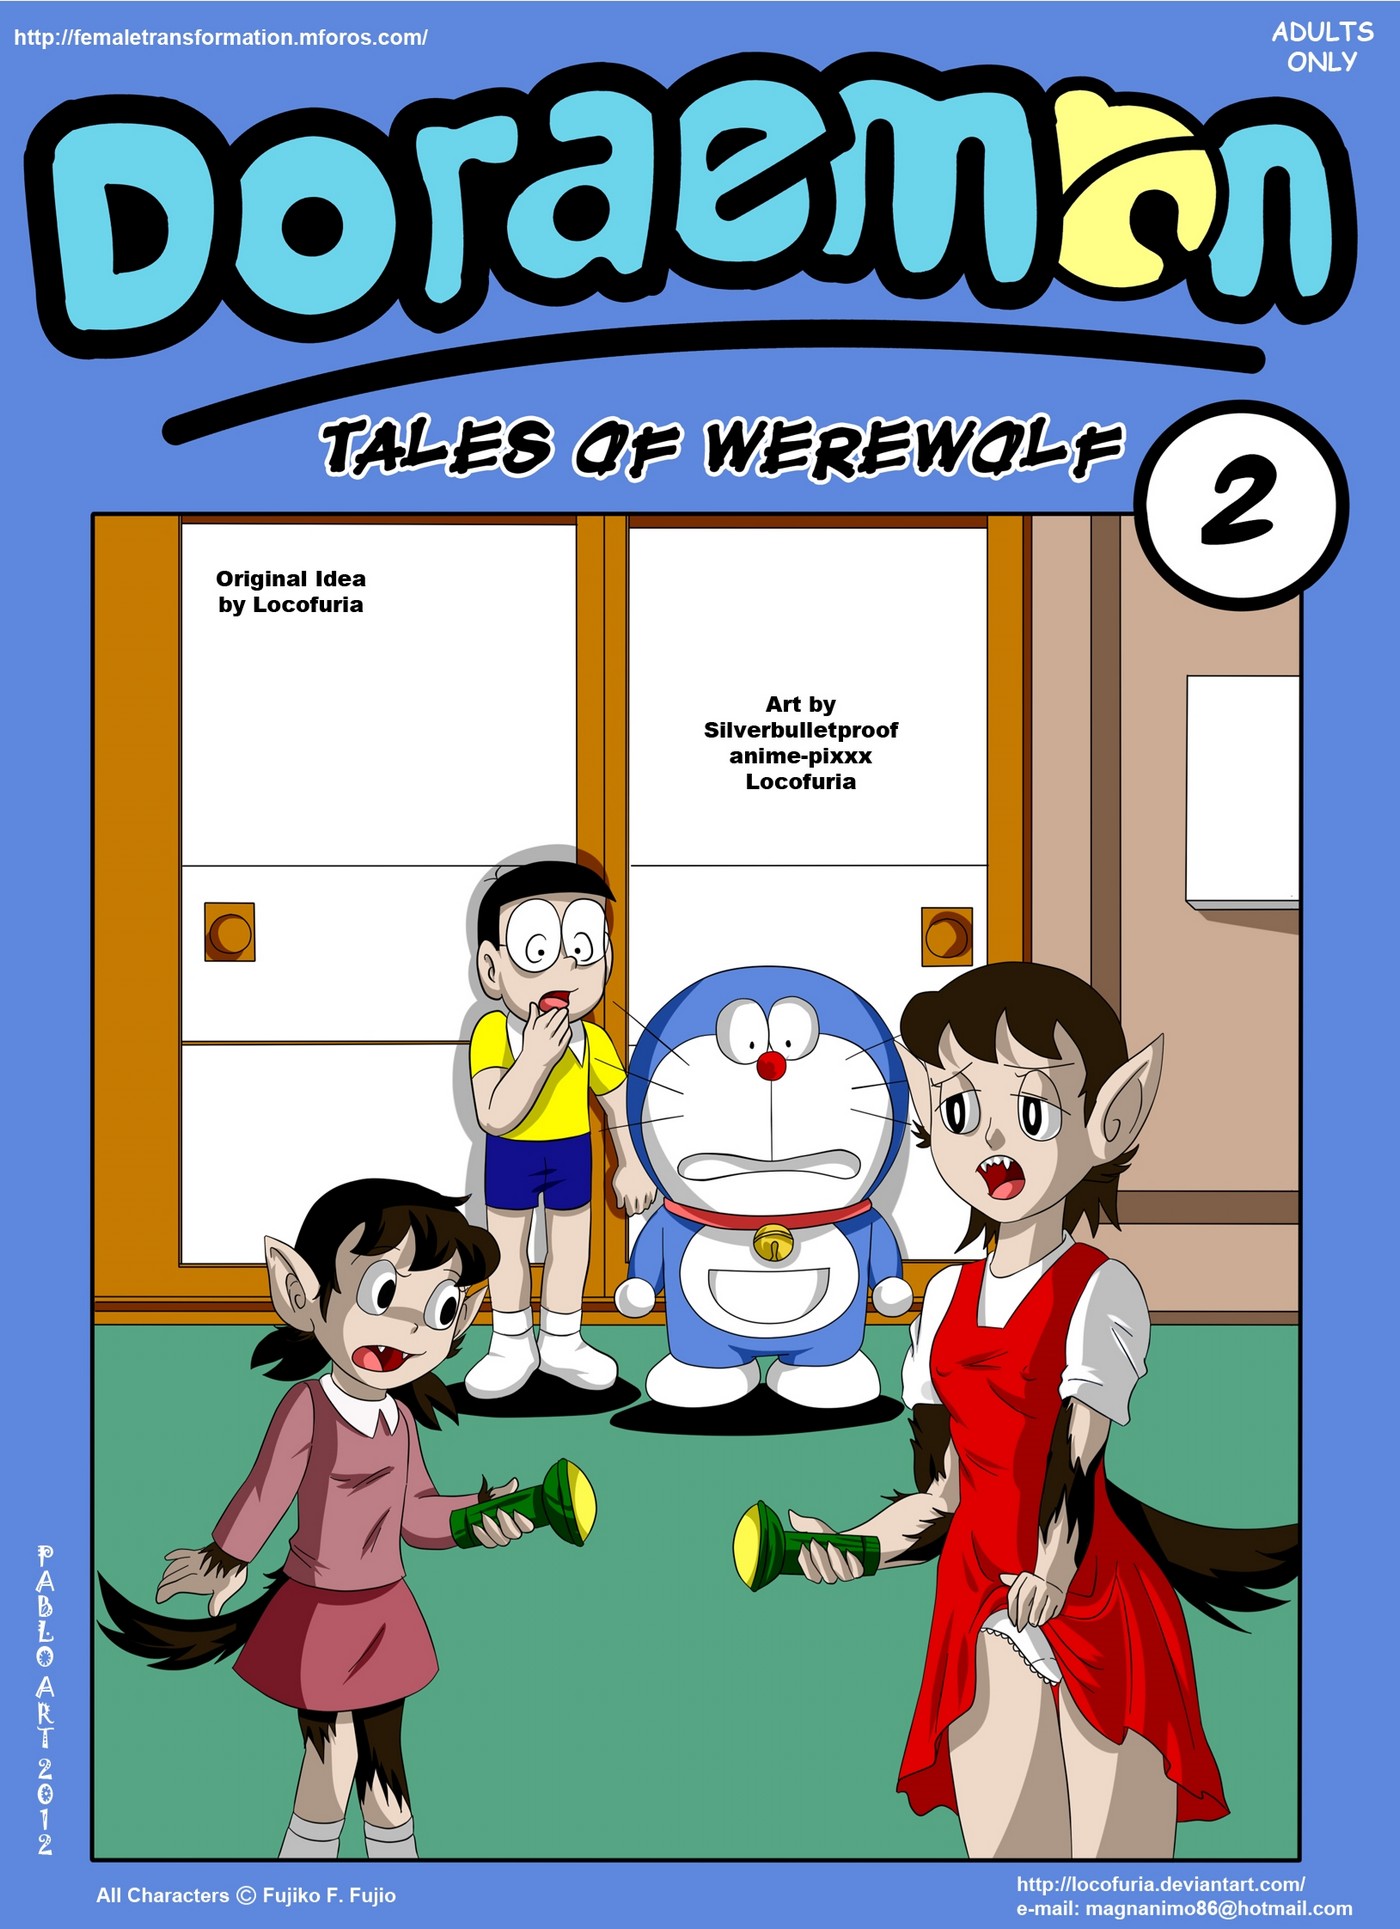 Hot Sex Of Cartoon Doraemon - Doraemon Tales of Werewolf 2 - KingComiX.com